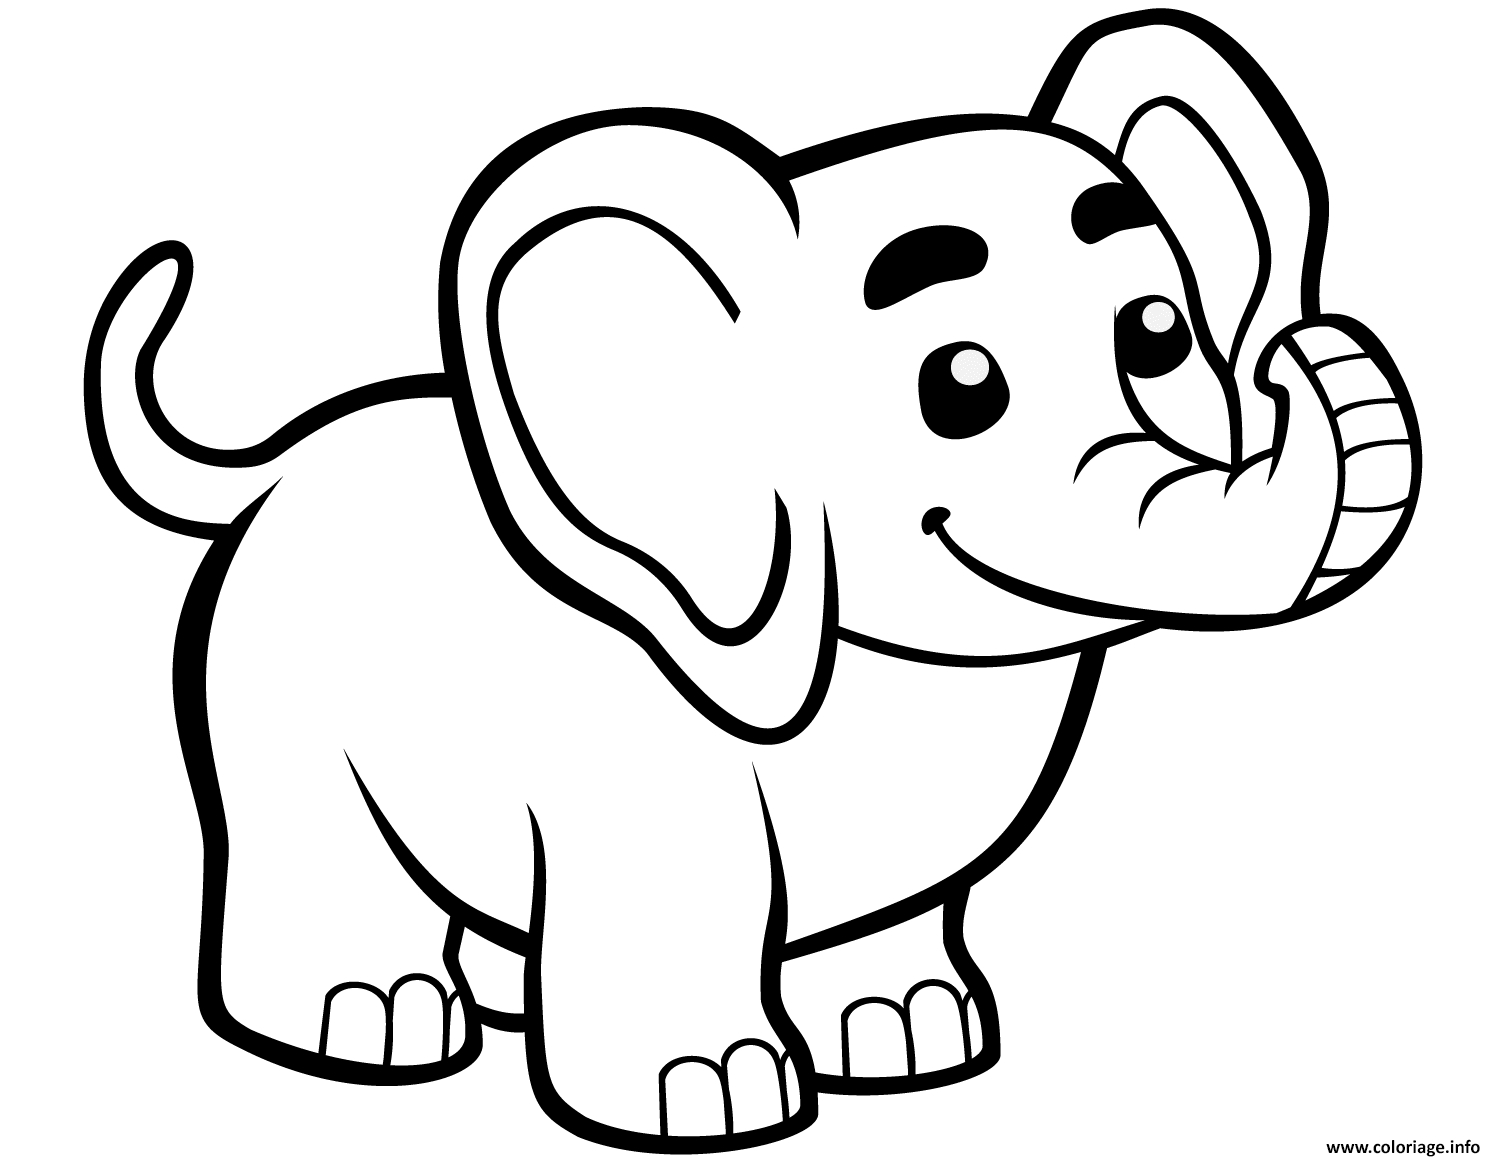 Coloriage Mignon Bebe Elephant Dessin Animaux Mignon À Imprimer concernant Coloriage À Imprimer Animaux Mignon